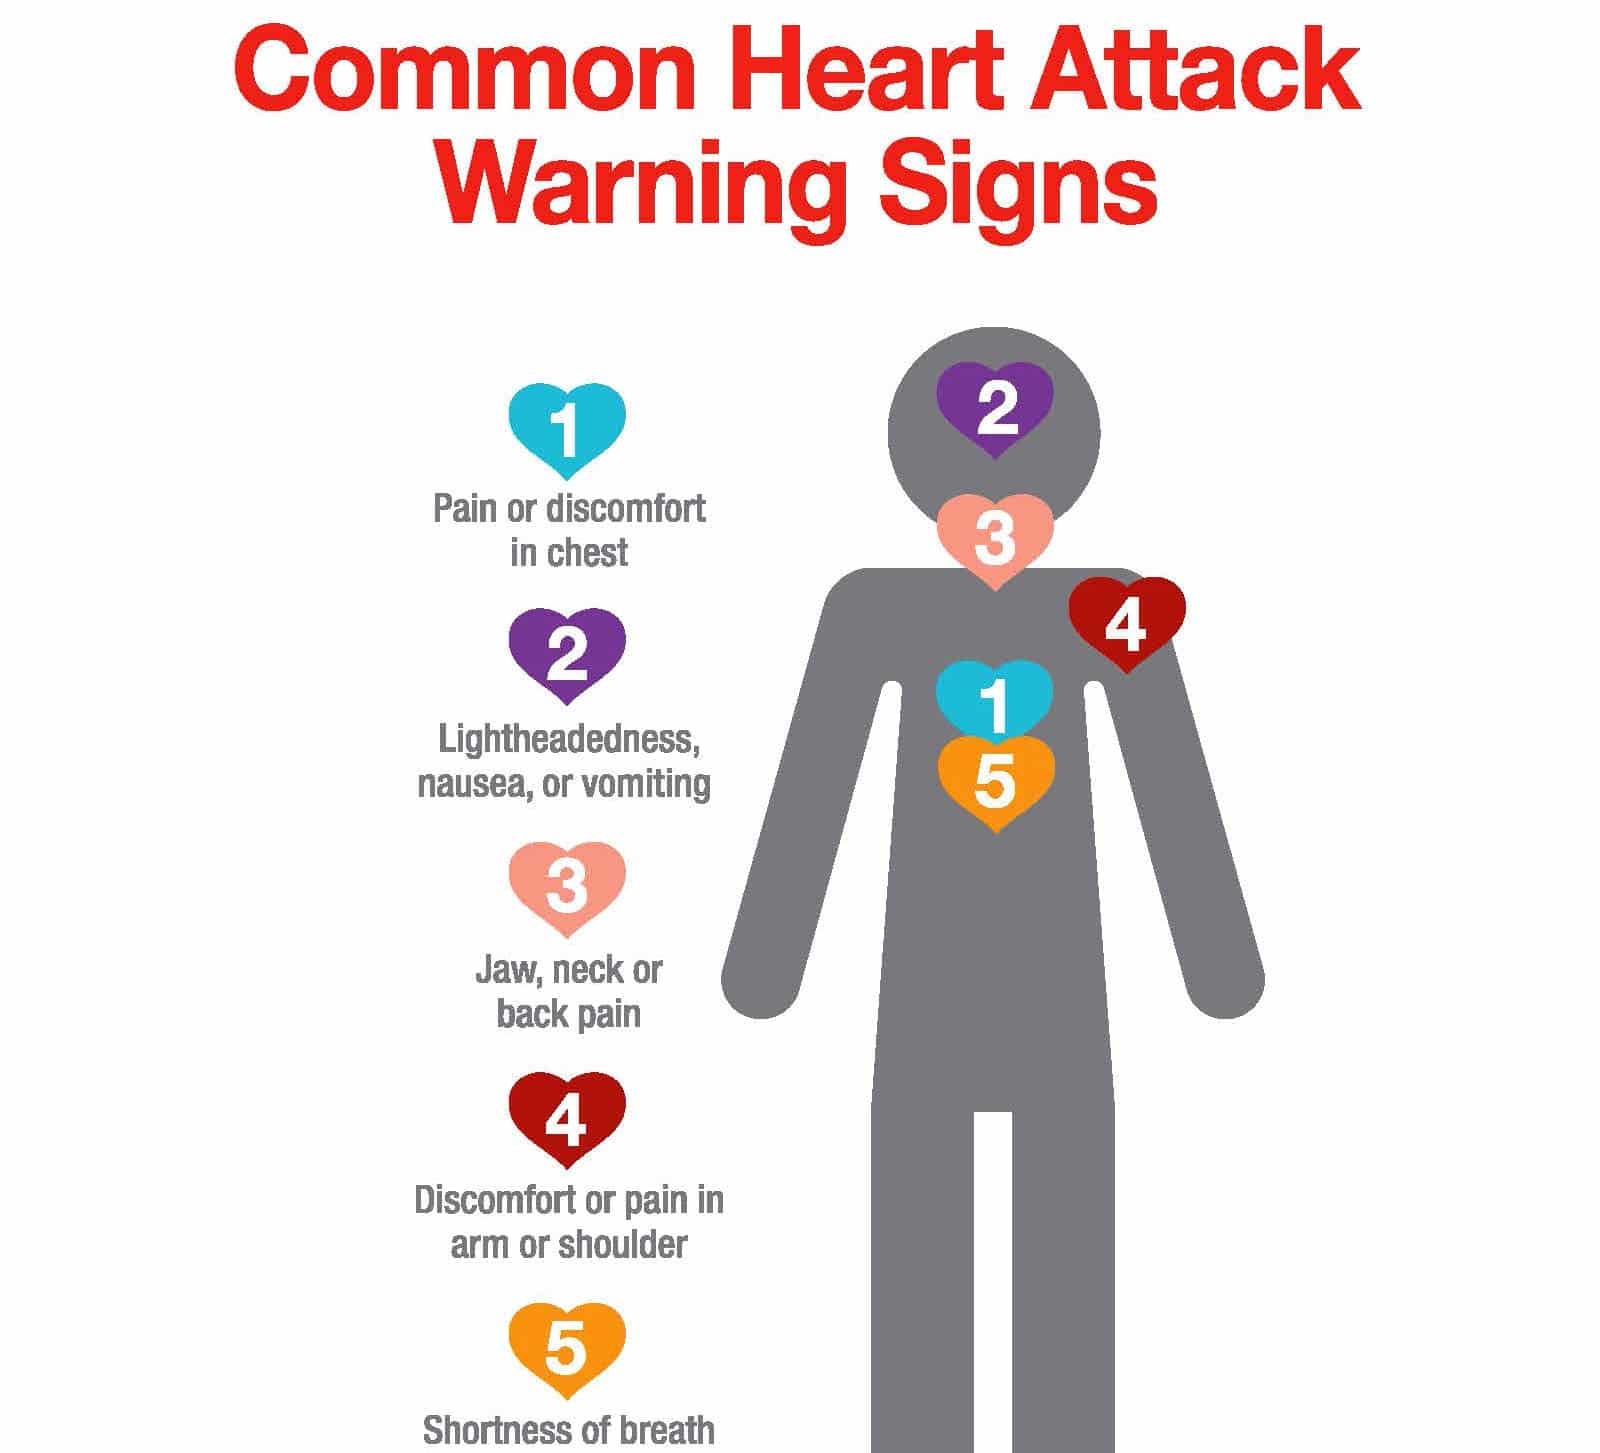 Warning Signs of Heart Attack